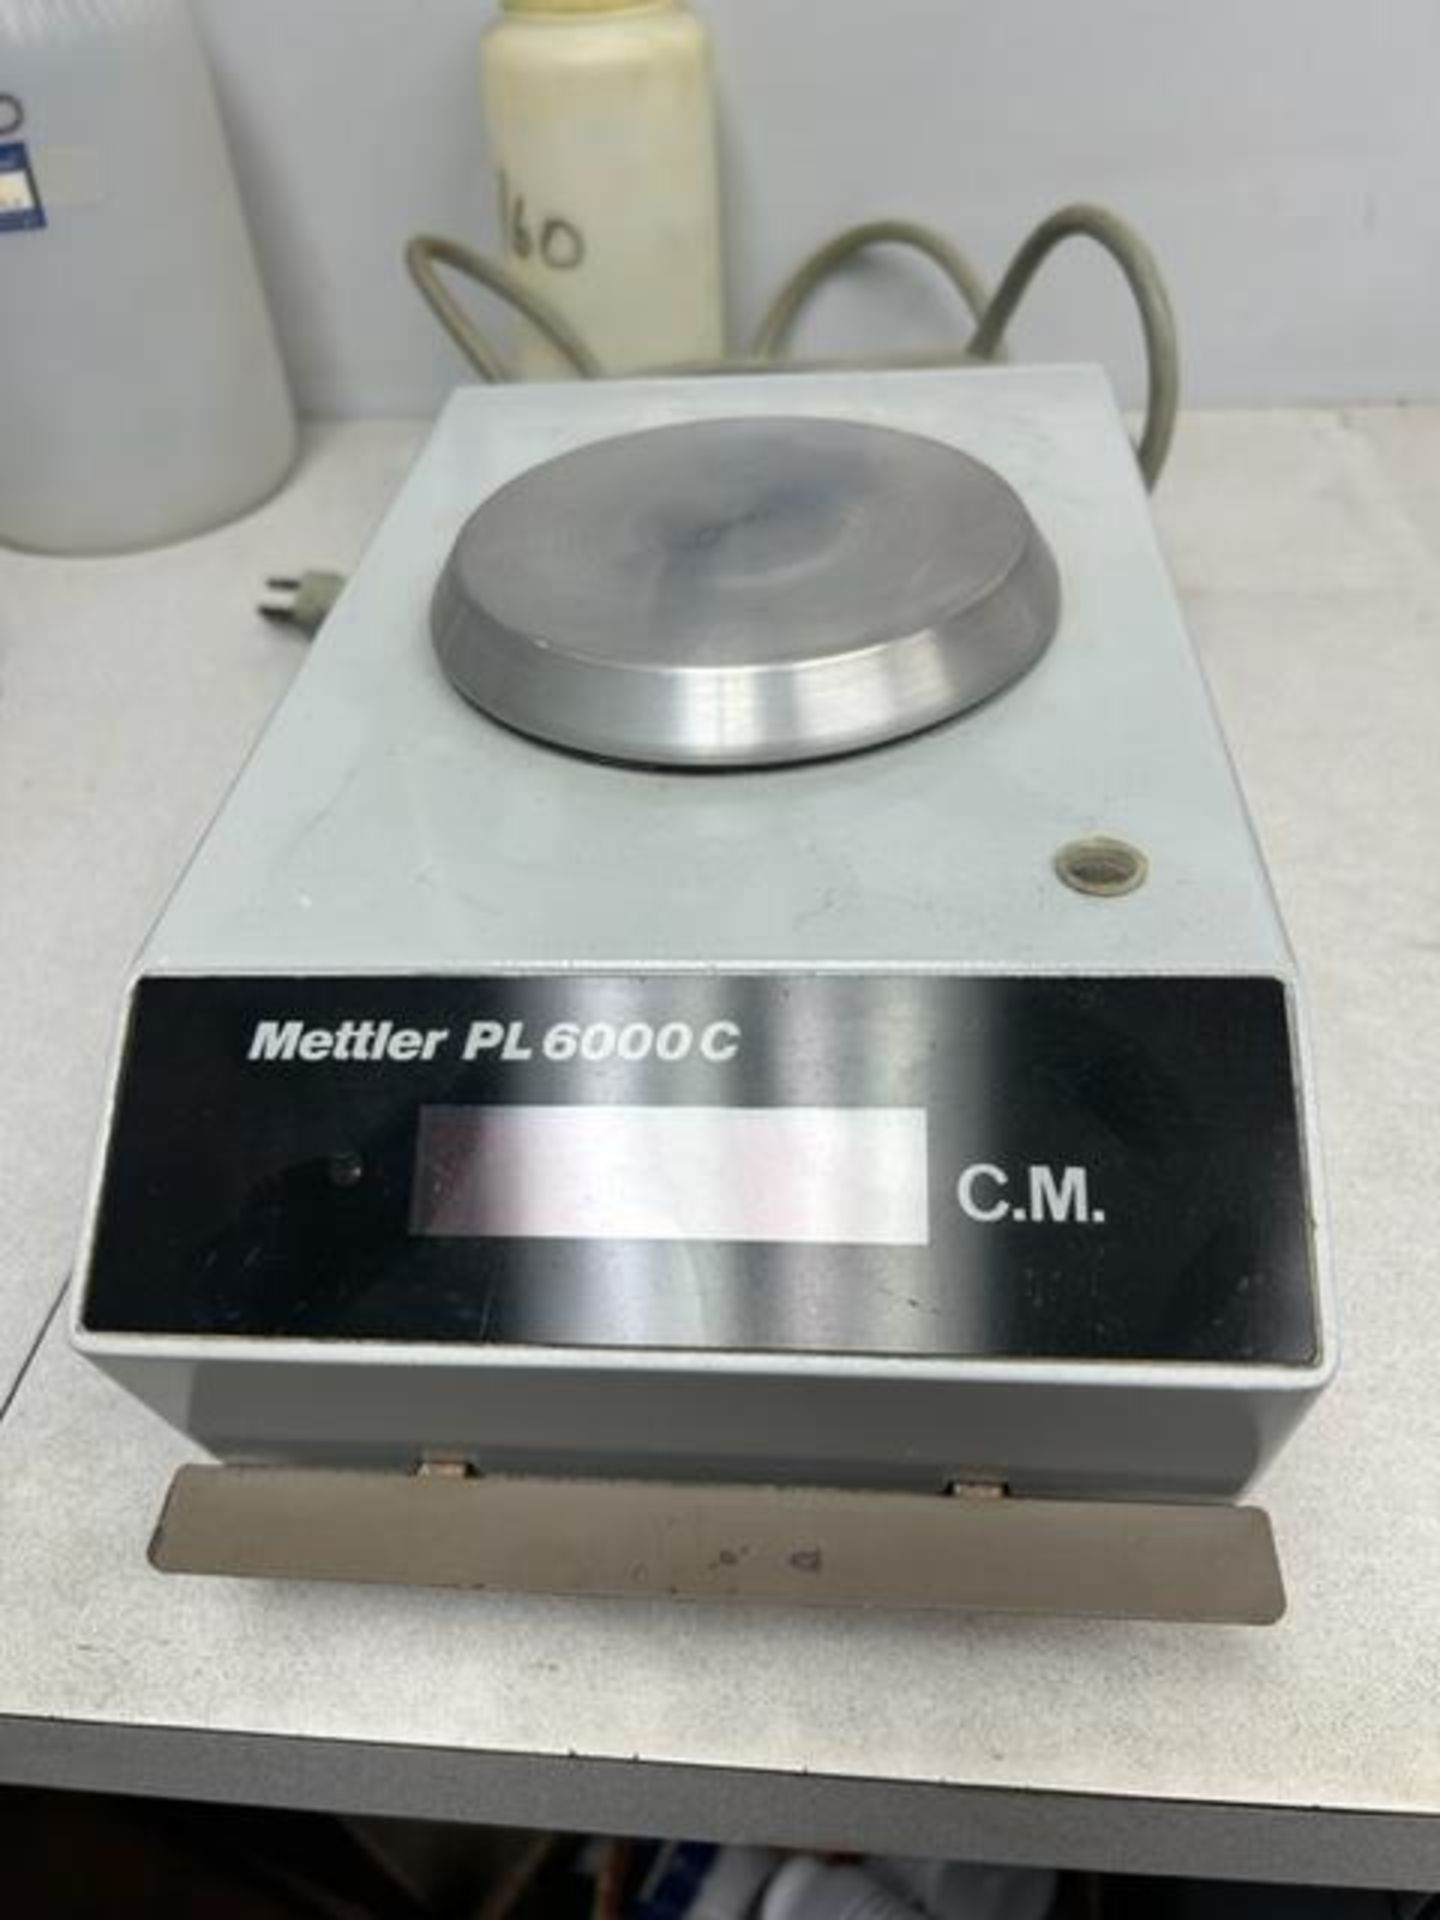 Mettler PL 6000C Scale